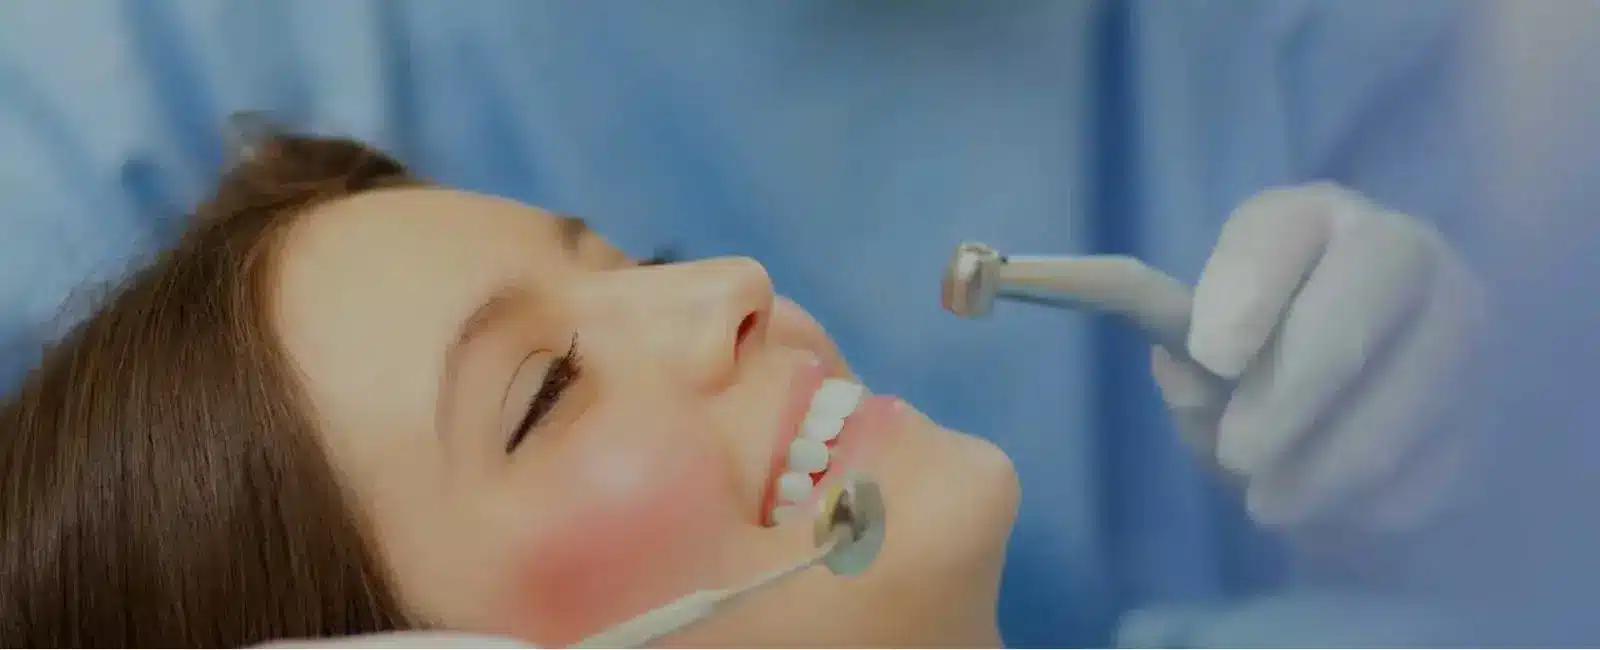 Dental Treatment At Affinity Dental Chicago